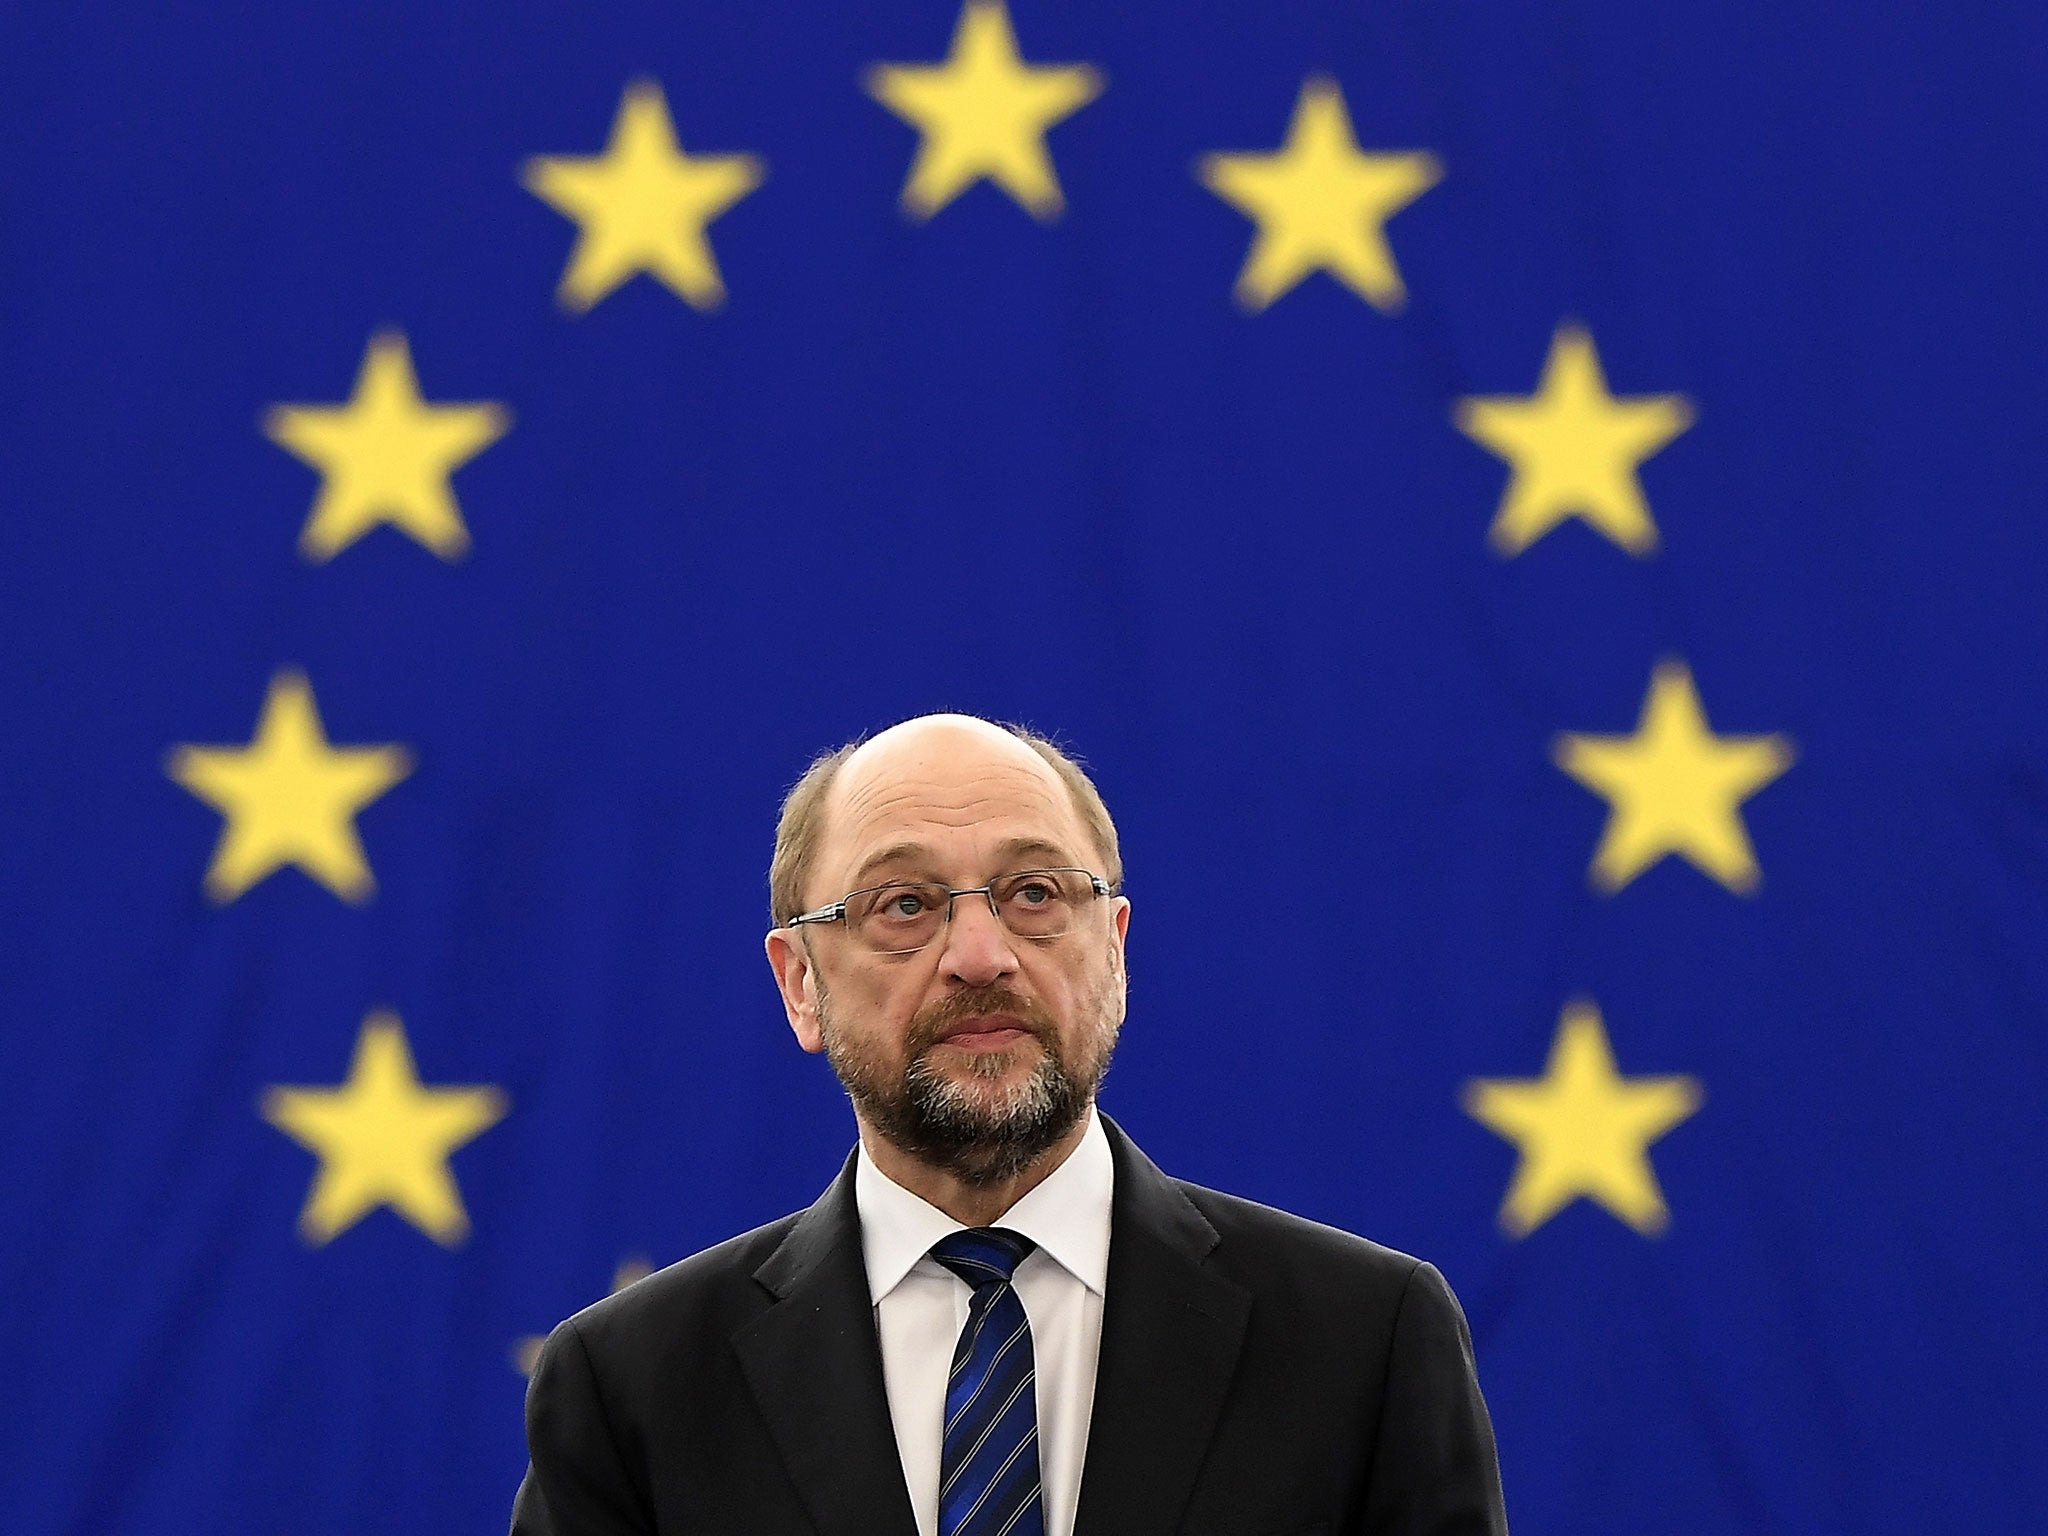 Martin Schulz in Strasbourg on January 16, 2017